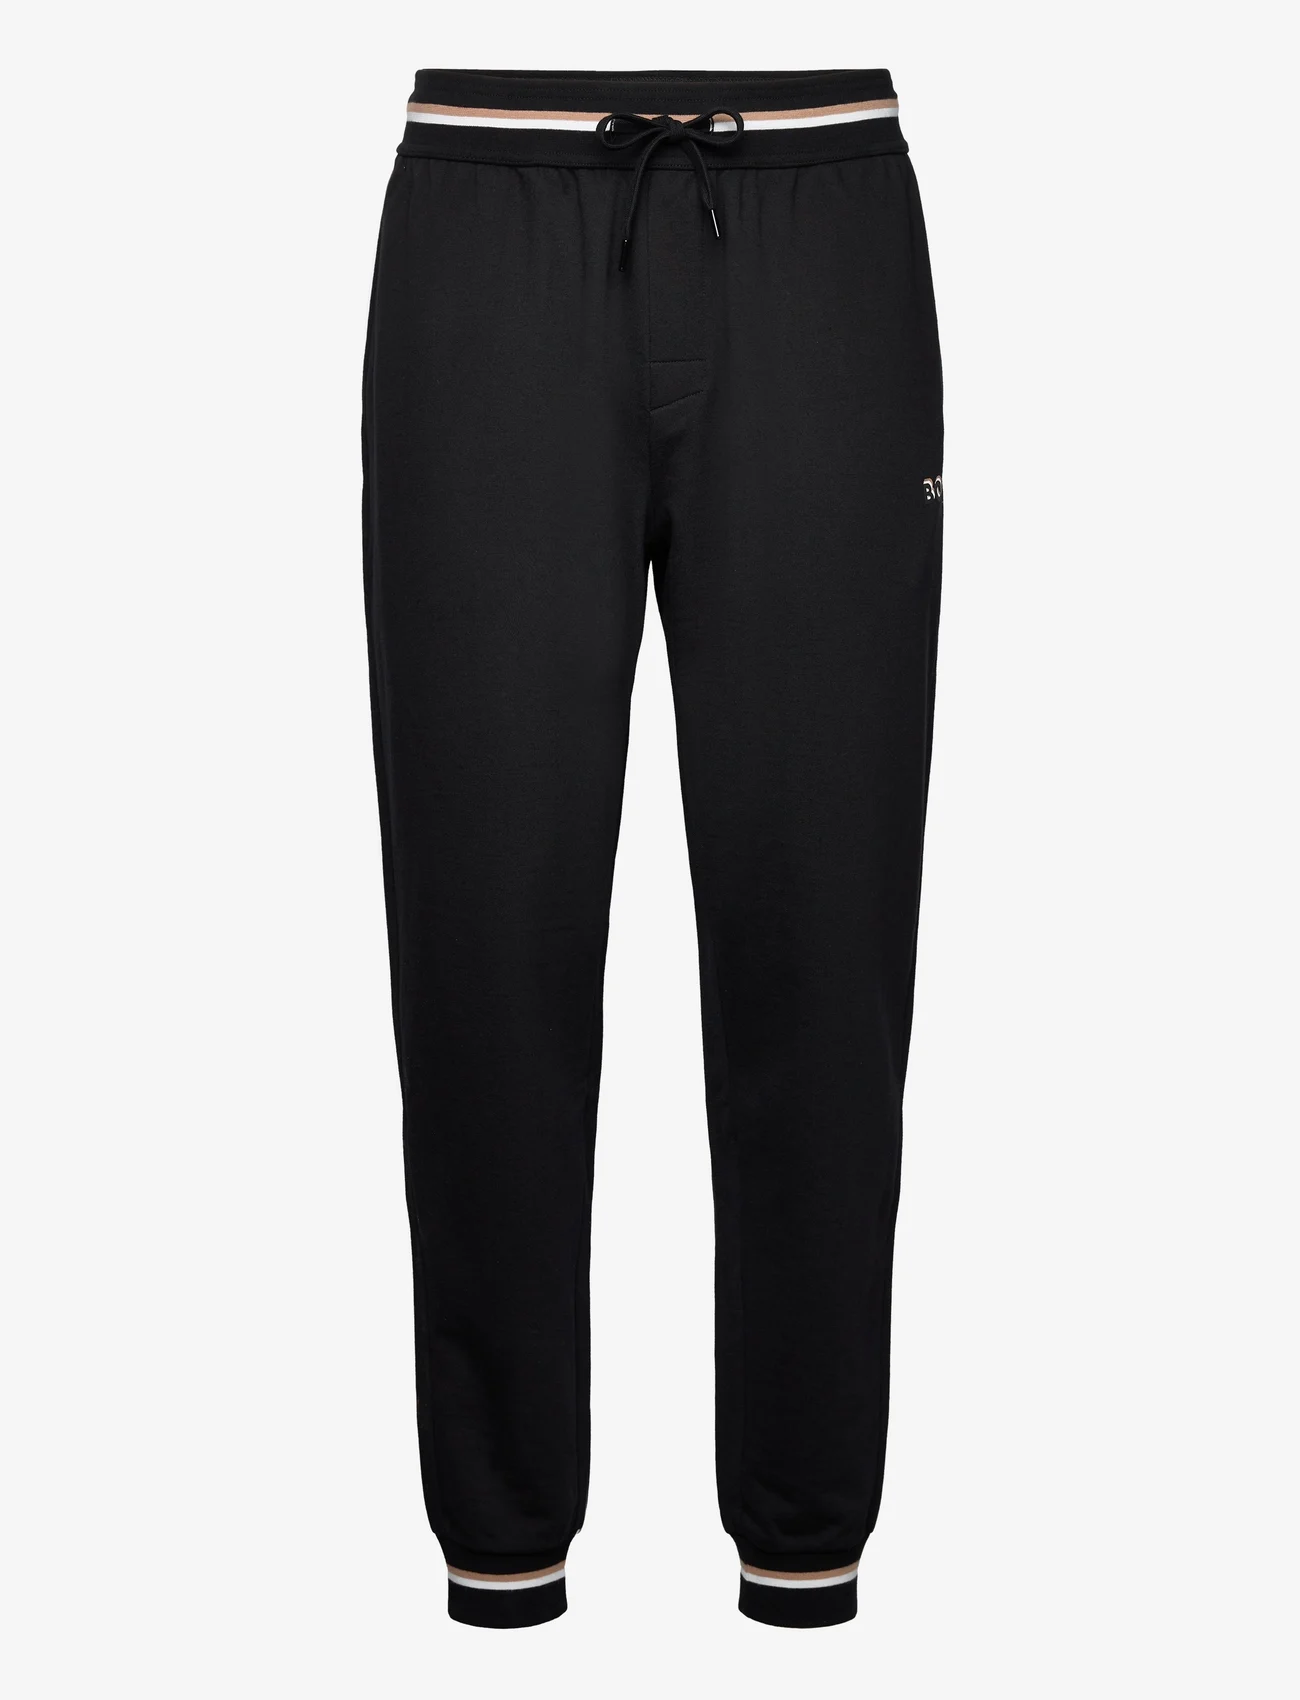 BOSS - Iconic Pants - sweatpants & joggingbukser - black - 0